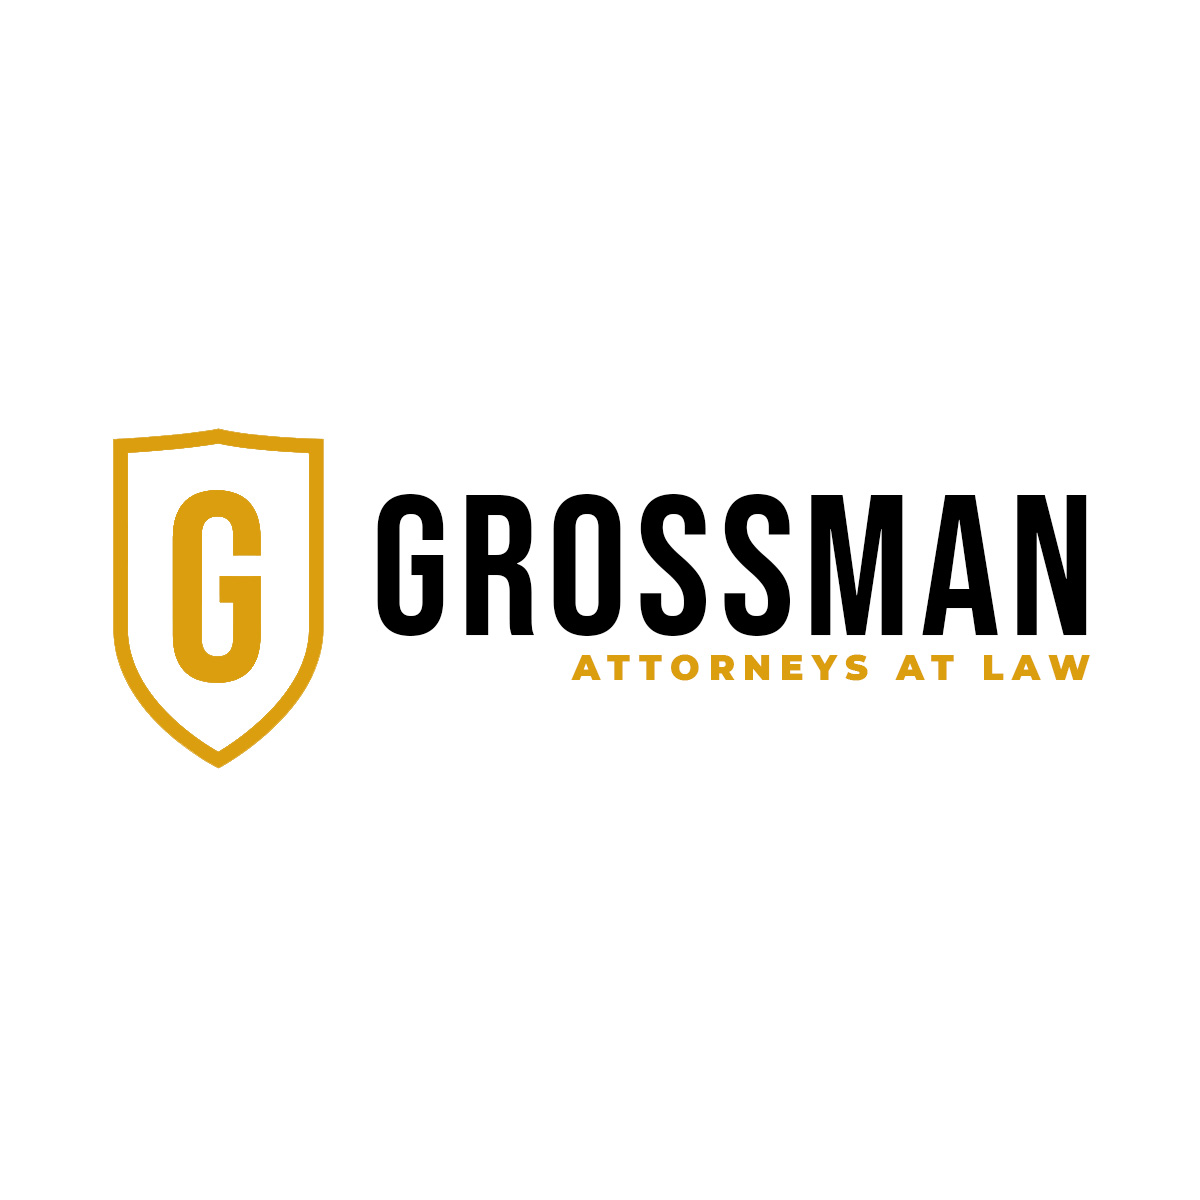 grossman attorneys at law | lawyer in boca raton